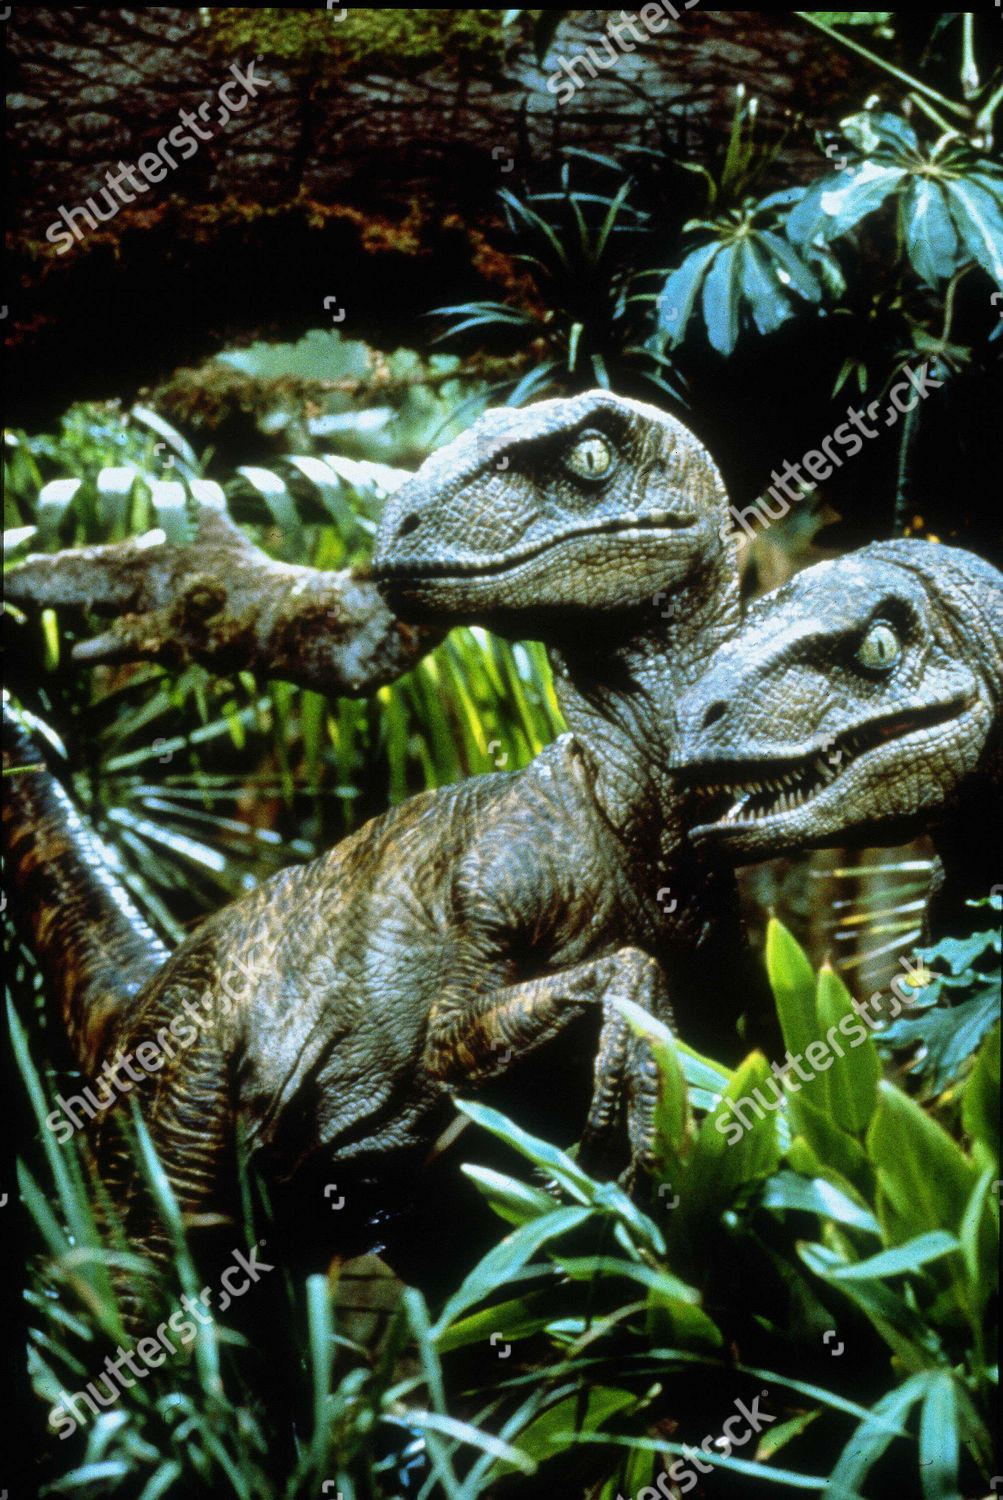 1993 Jurassic Park